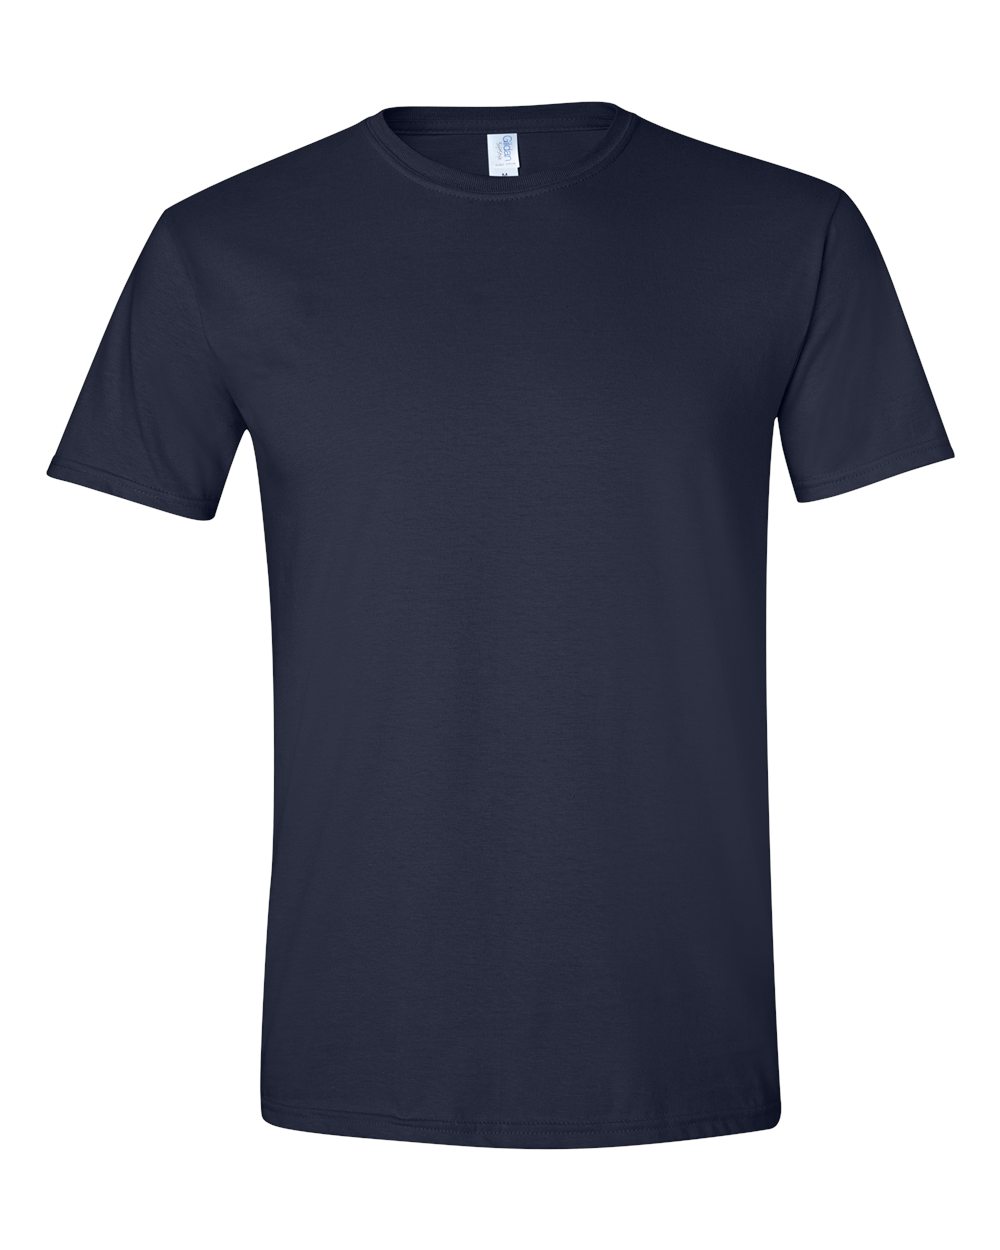 Pretreated Gildan 64000 Softstyle T-Shirt - Navy